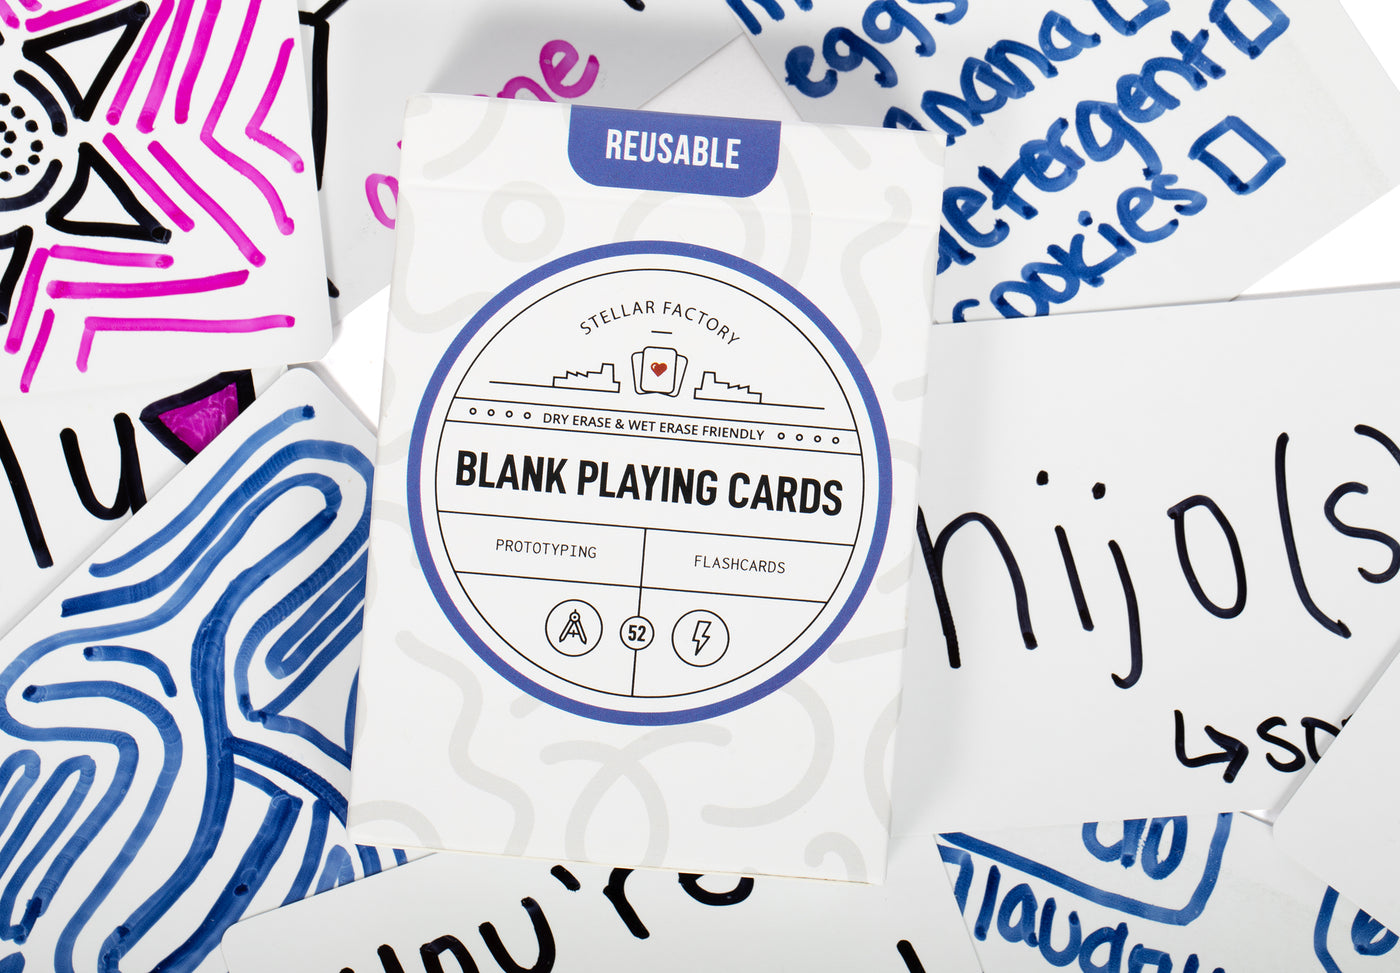 Reusable Blank Playing Cards – Stellar Factory